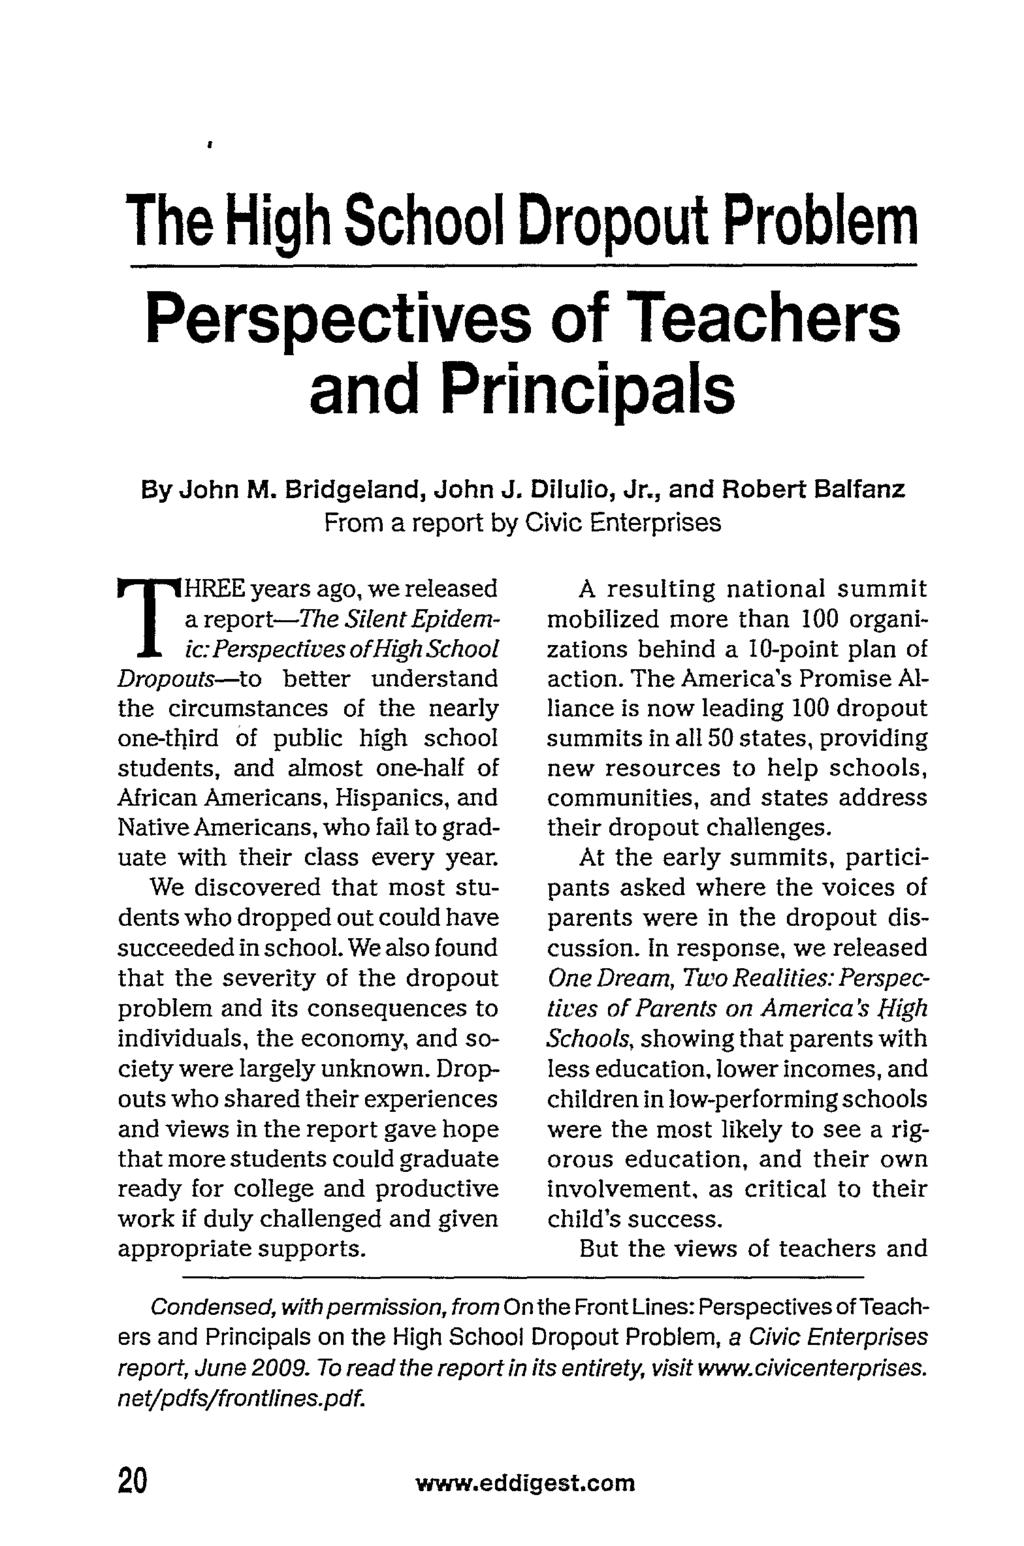 The High School Dropout Problem Perspectives of Teachers and Principals By John M. Bridgeland, John J. Dilulio, Jr.